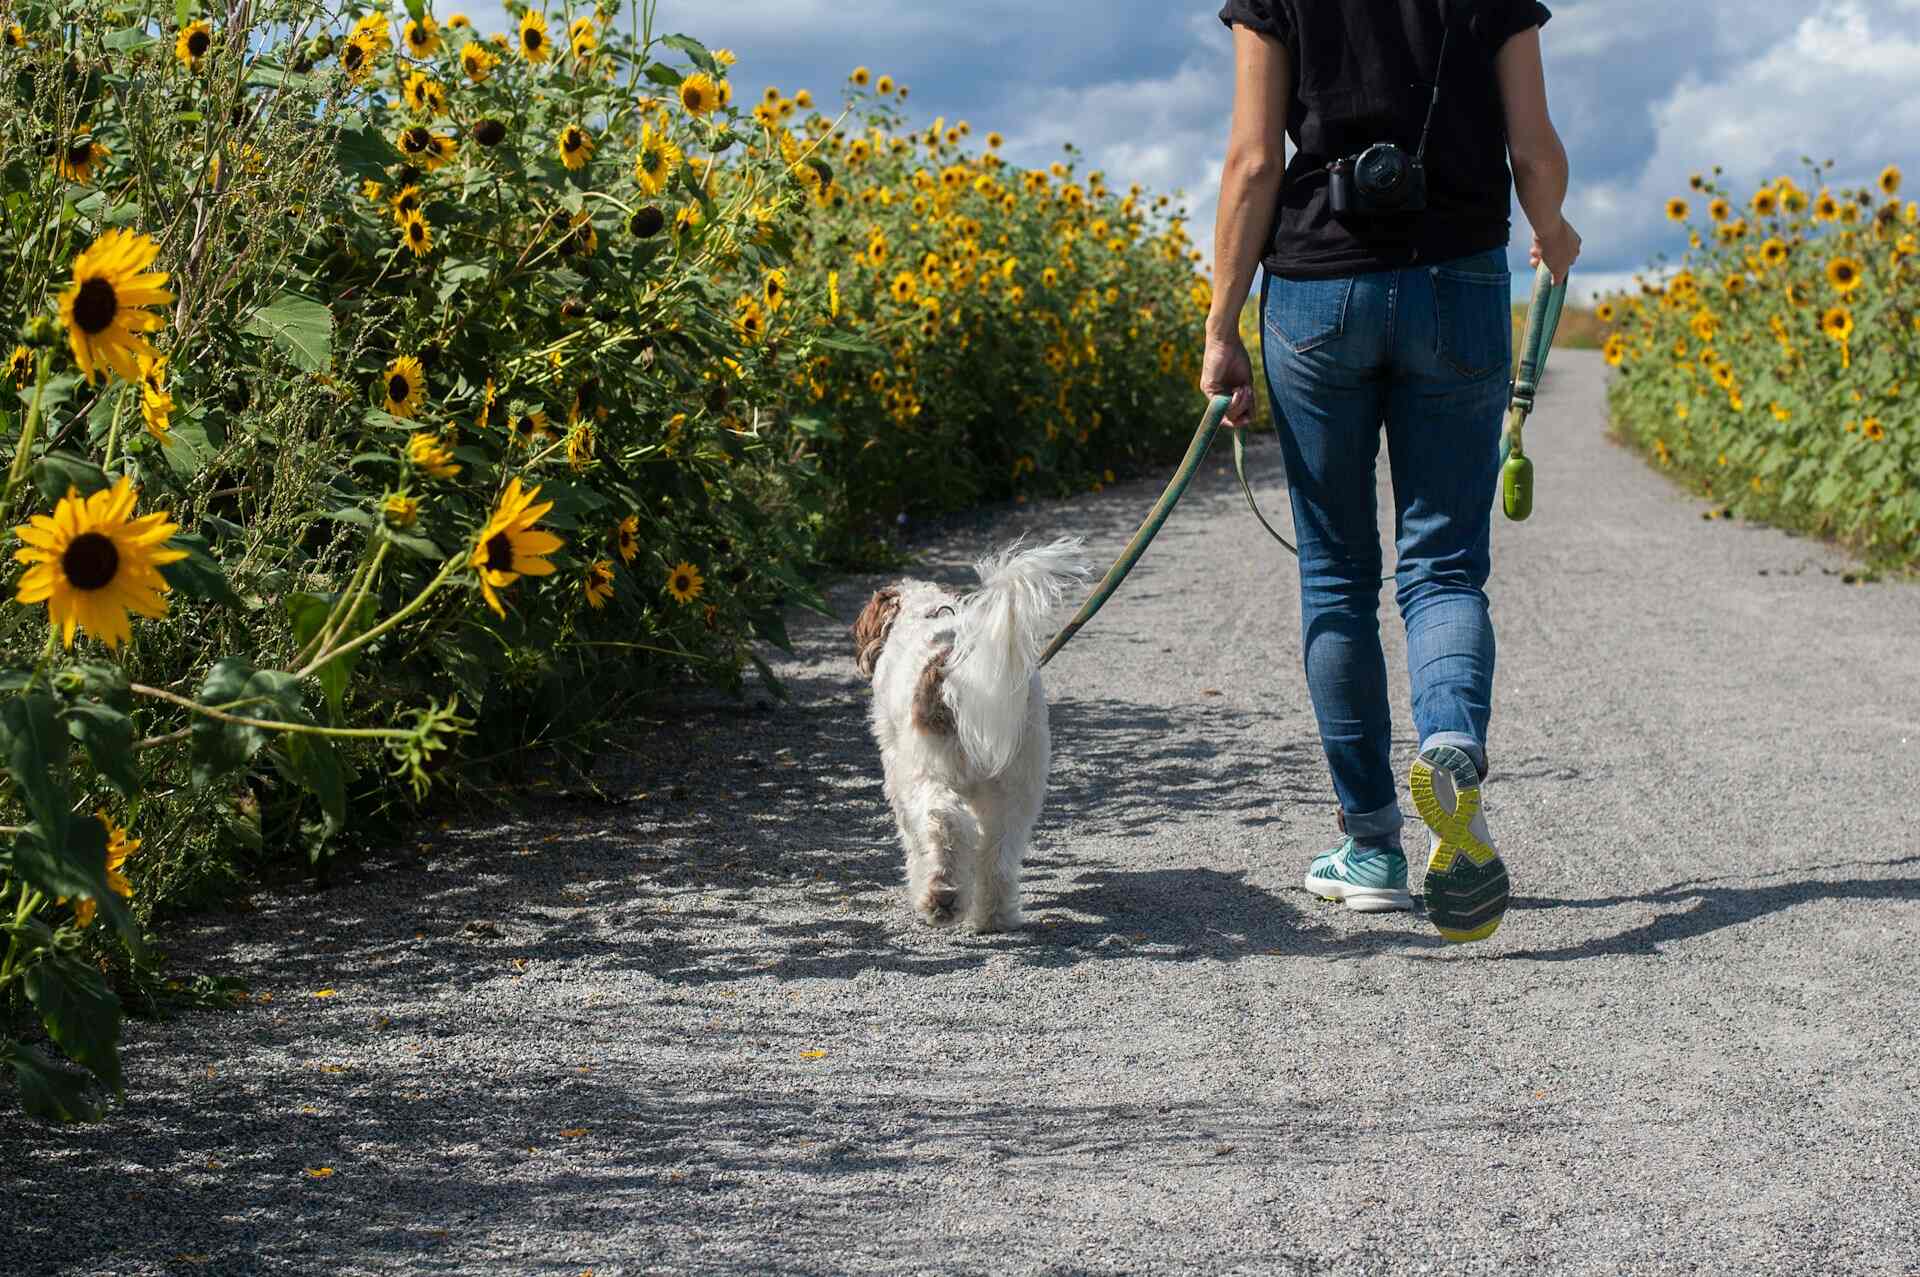 A woman walking her dog along a field of sunflowers